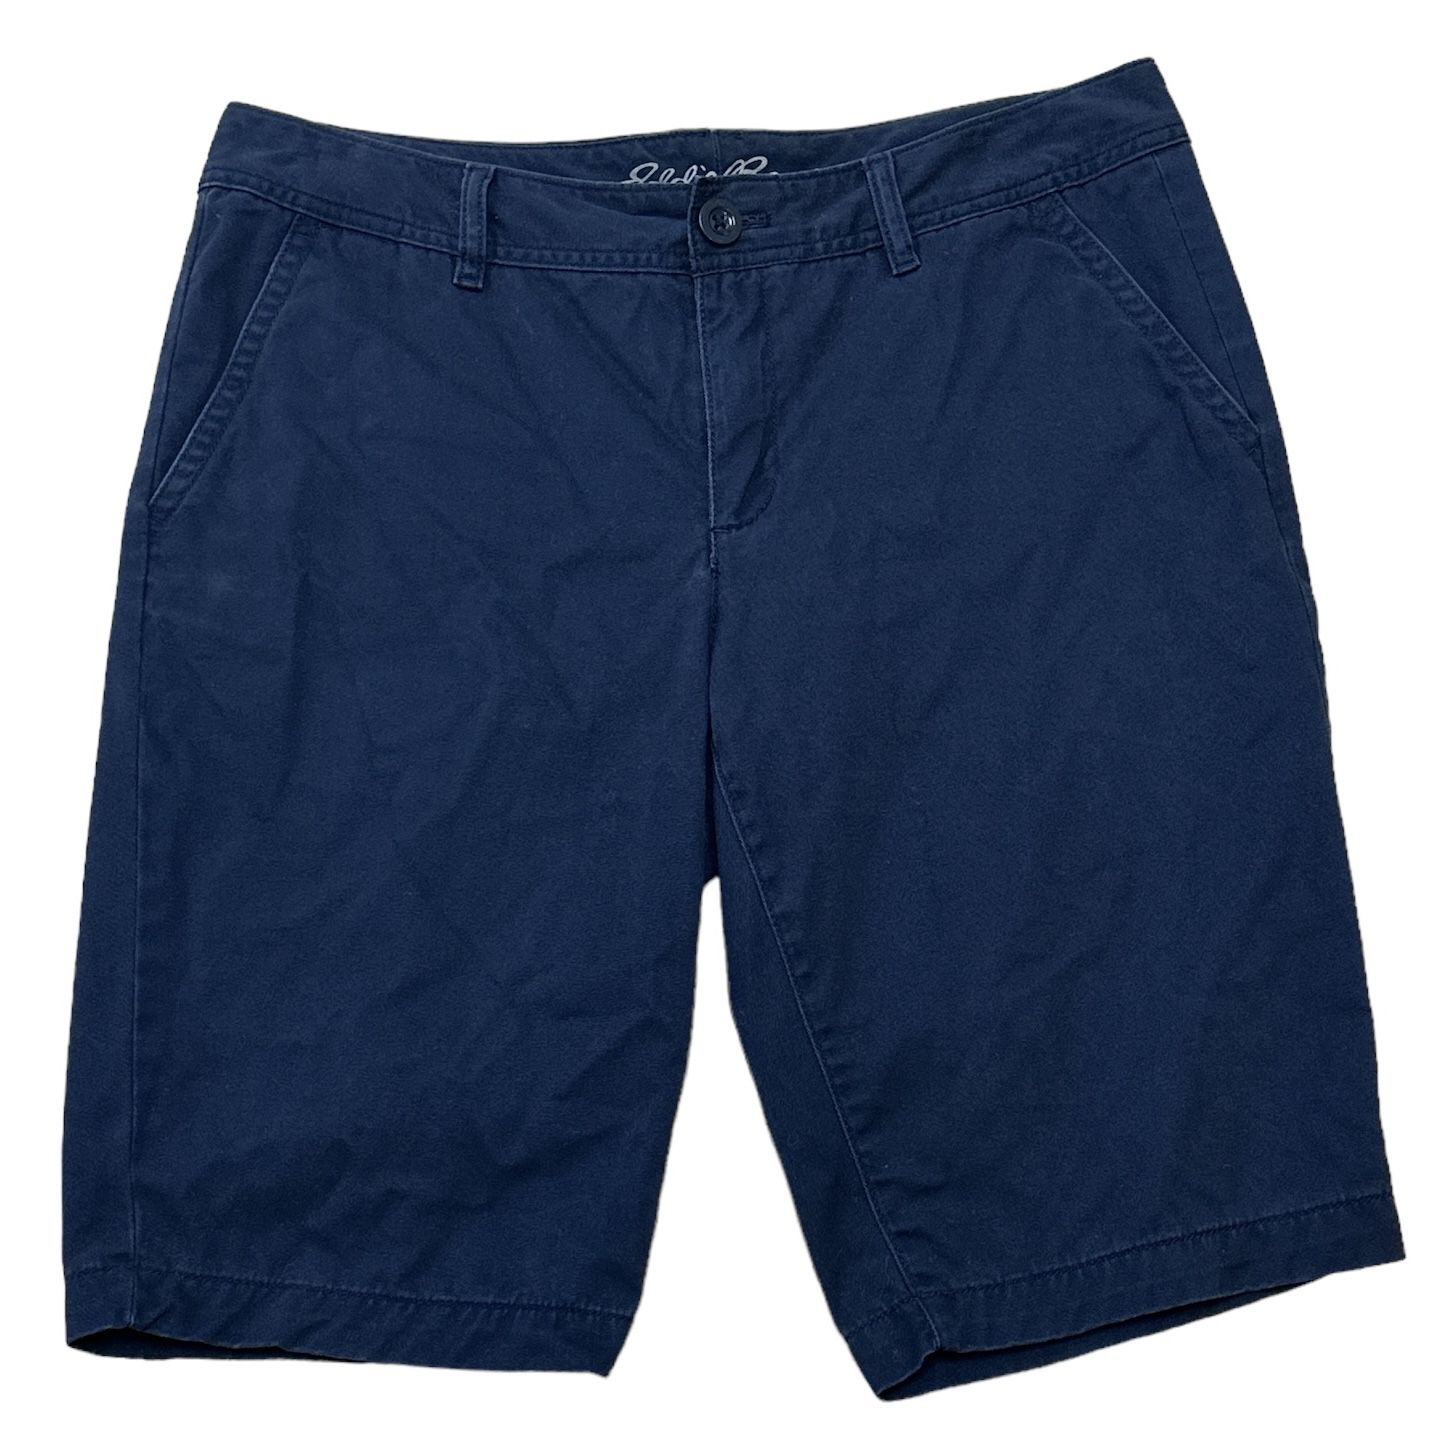 Eddie Bauer Women’s Navy Blue Casual Chino Shorts Size 6